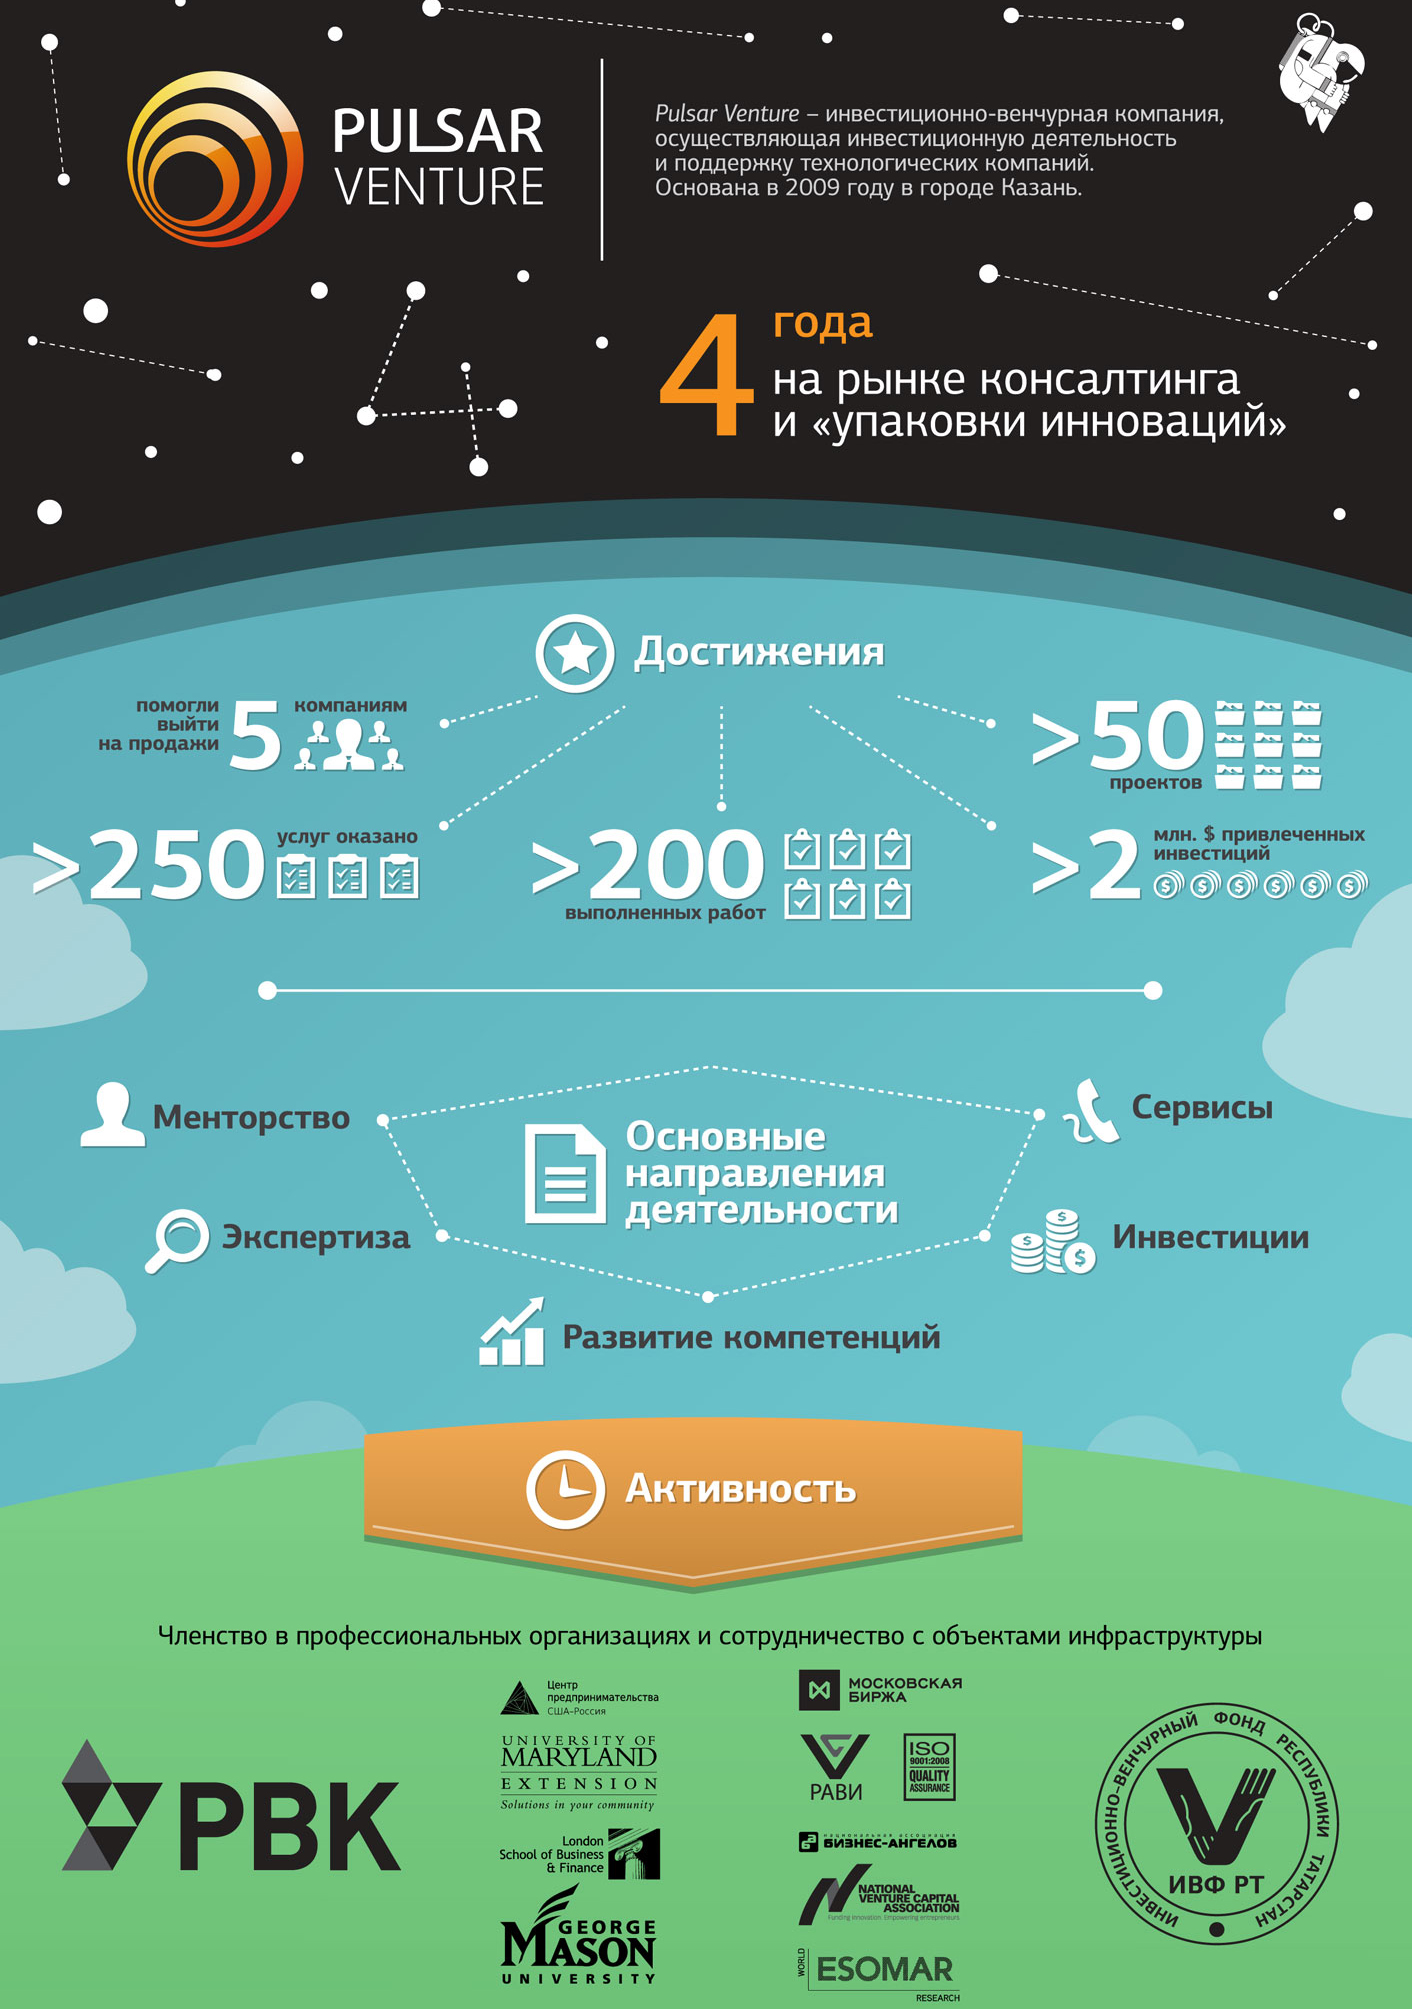 Pulsar Venture — 4 года на рынке «упаковки инноваций» Татарстана